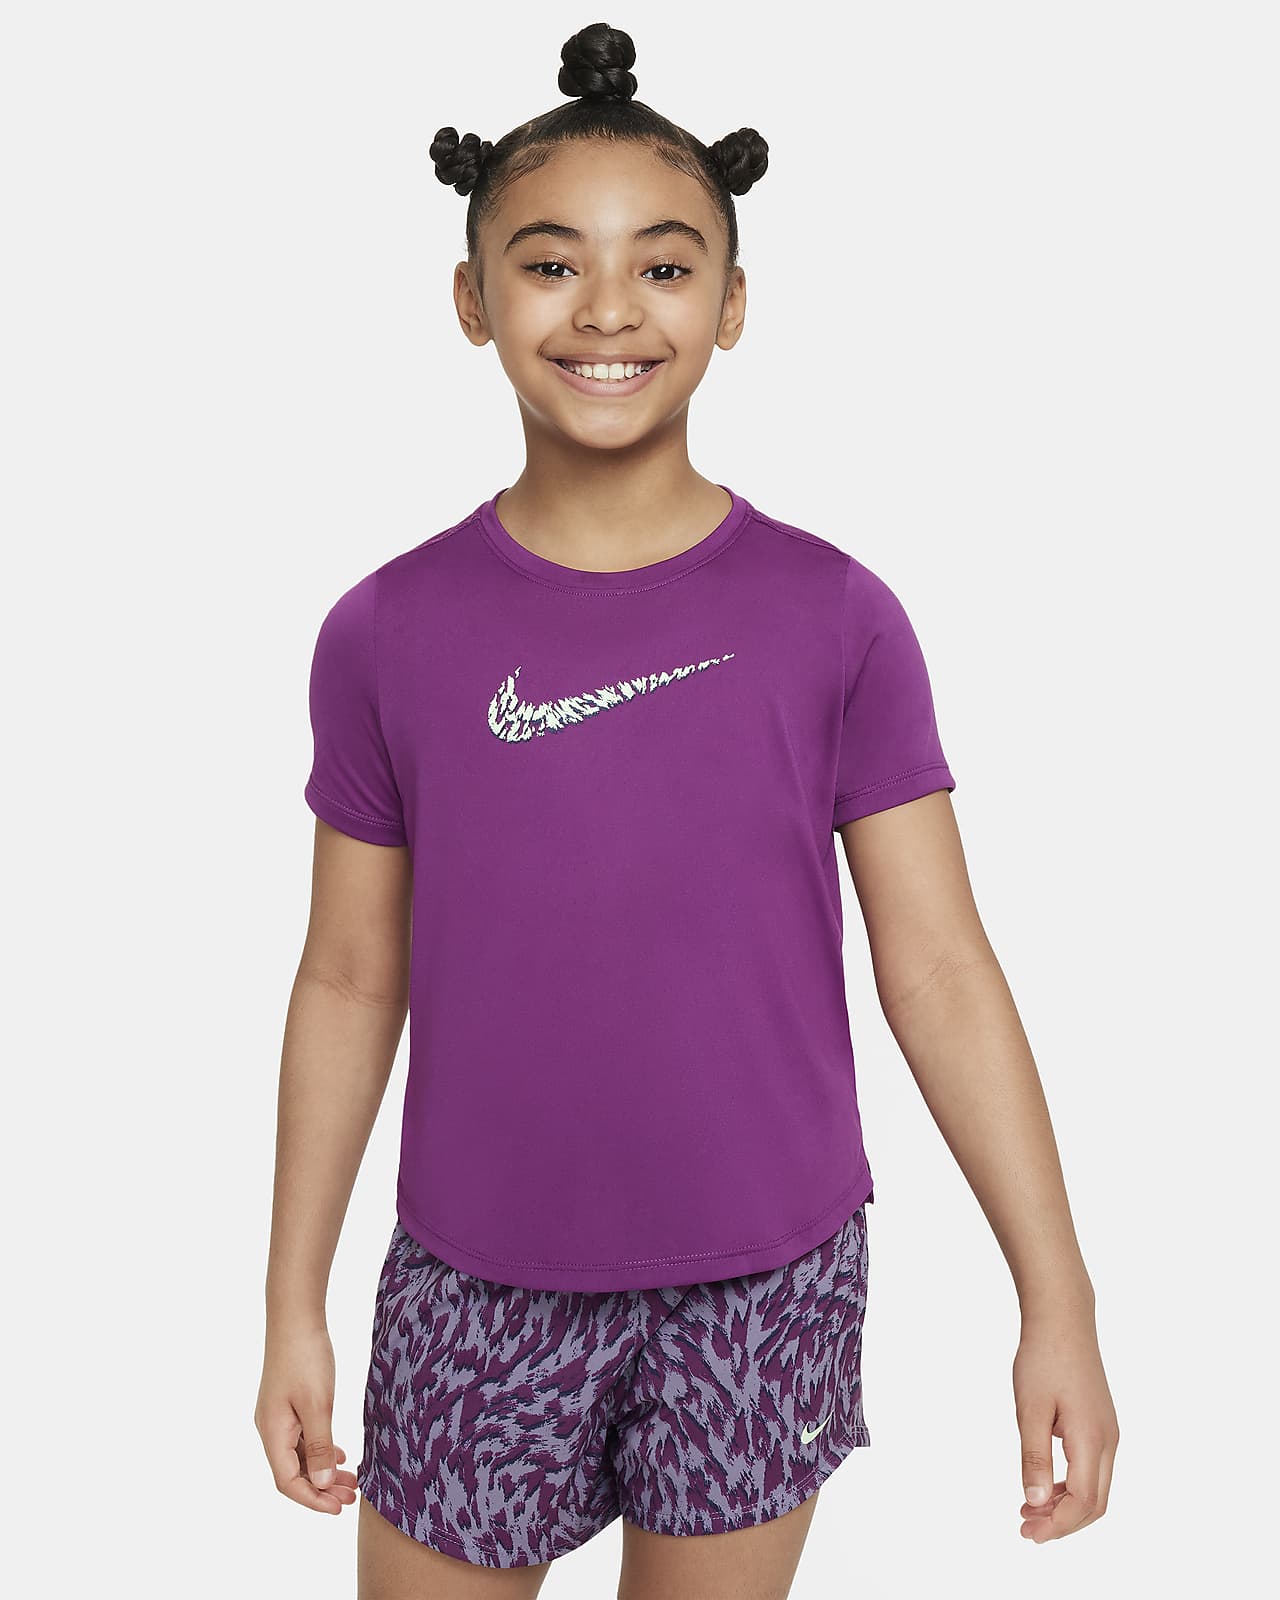 Nike One trainingstop met korte mouwen voor meisjes